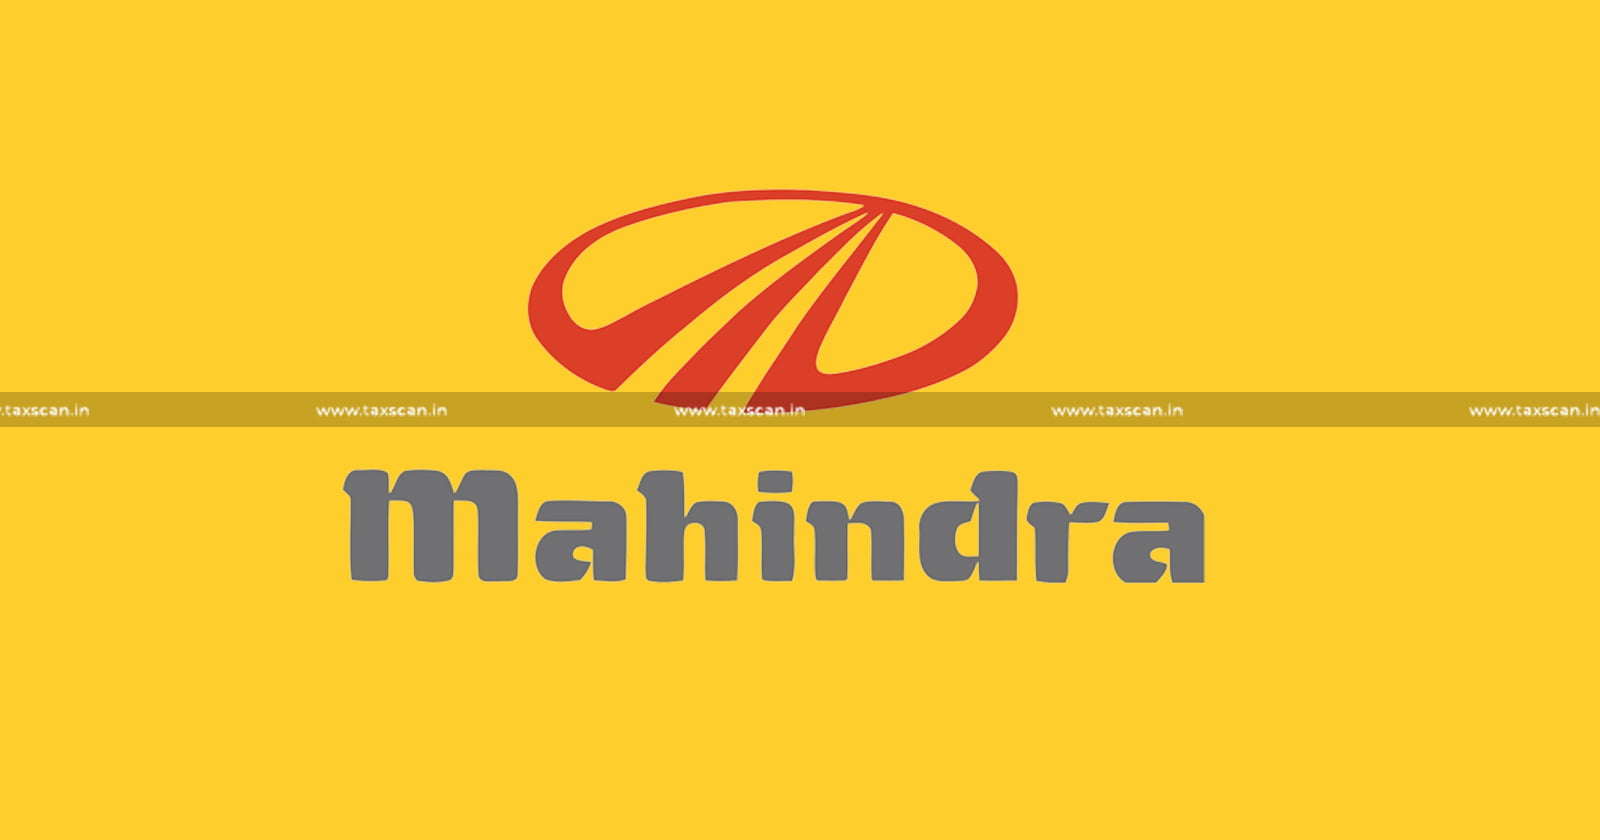 CA - CA Vacancy - CA Vacancies in Mahindra - Chartered Accountant vacancy - Mahindra career - Taxscan